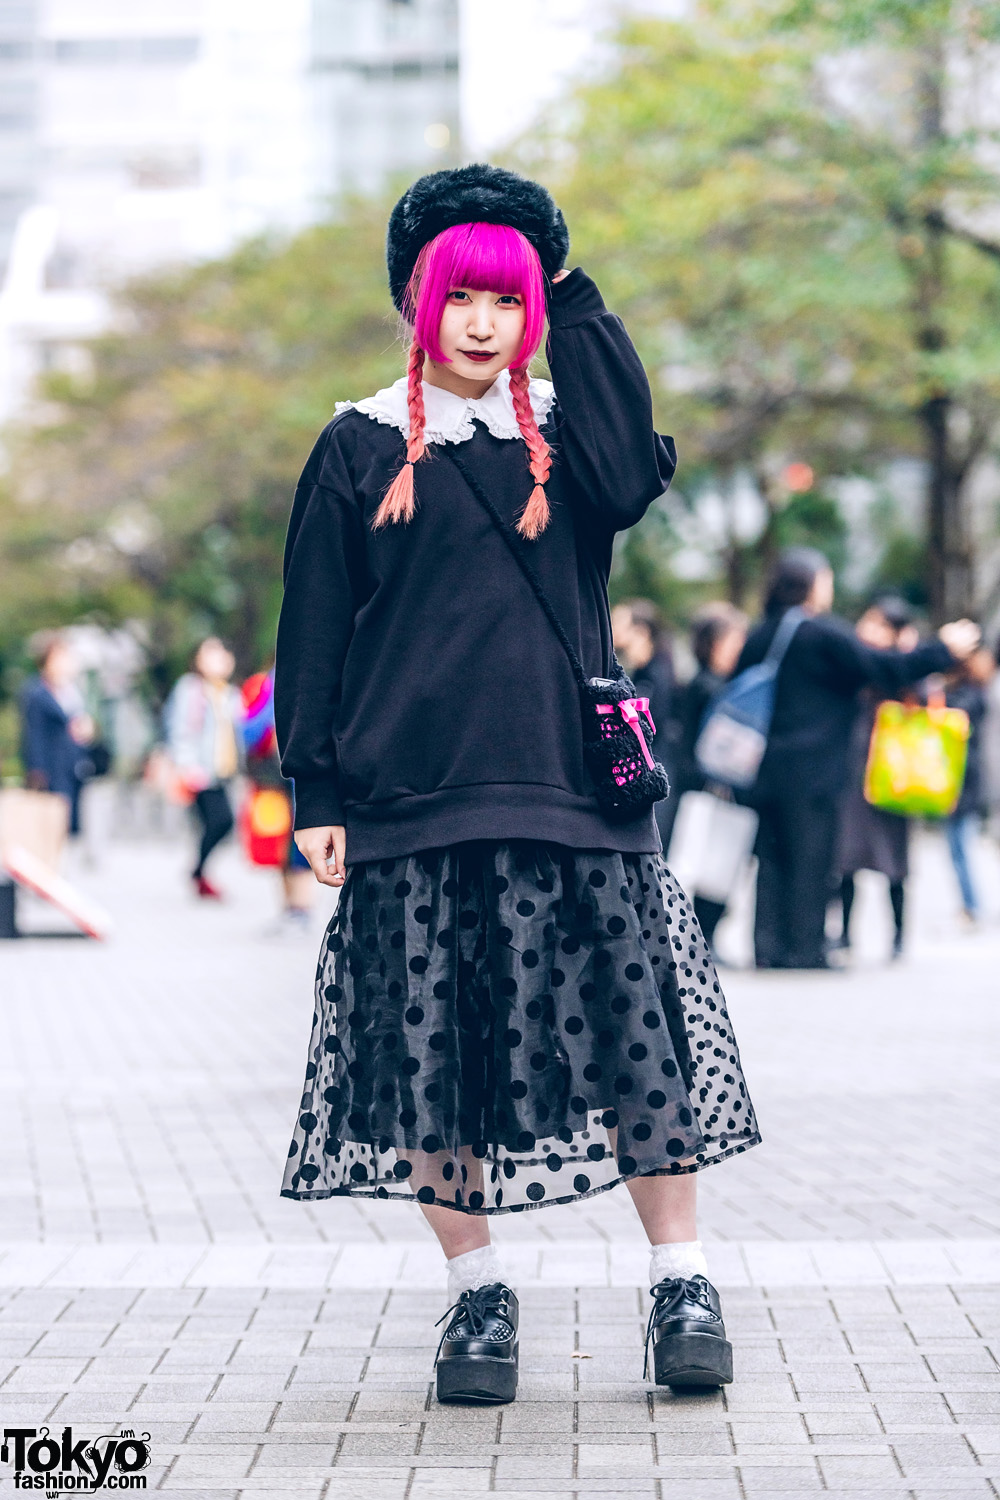 Lace Ruffle Tokyo Street Style w/ Twin Pink Braids, Furry Hat, Ruffle Collar Blouse, Merry Jenny Polka Dot Skirt & Yosuke Creepers